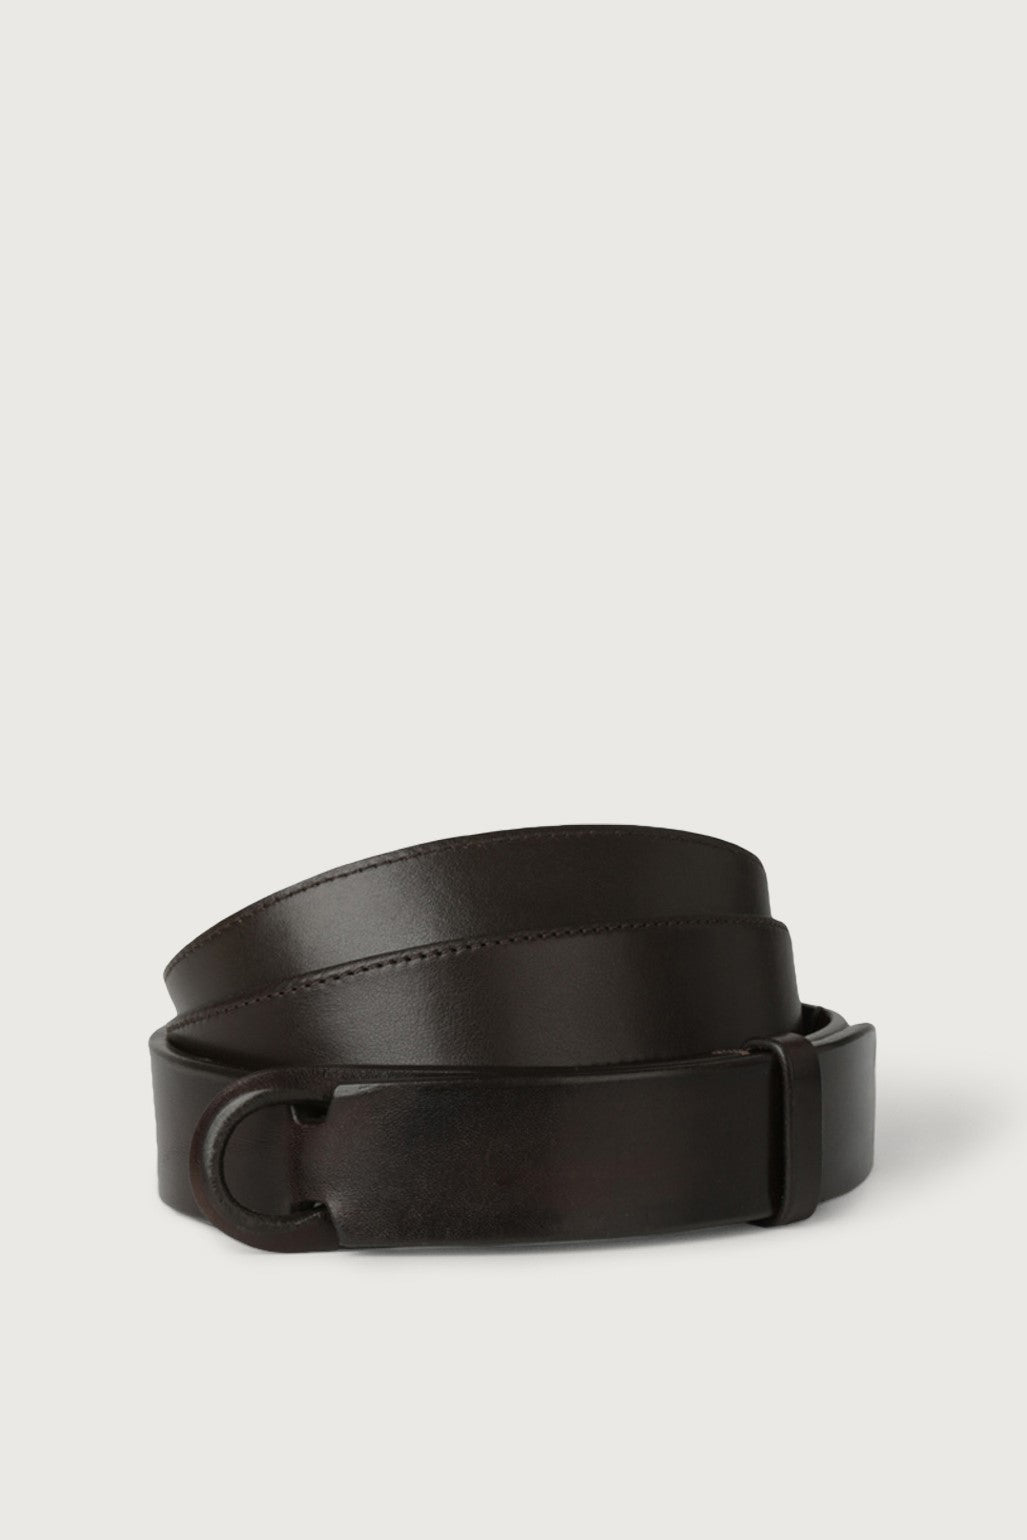 Orciani Men's Dark Brown Leather Nobuckle Belt-1